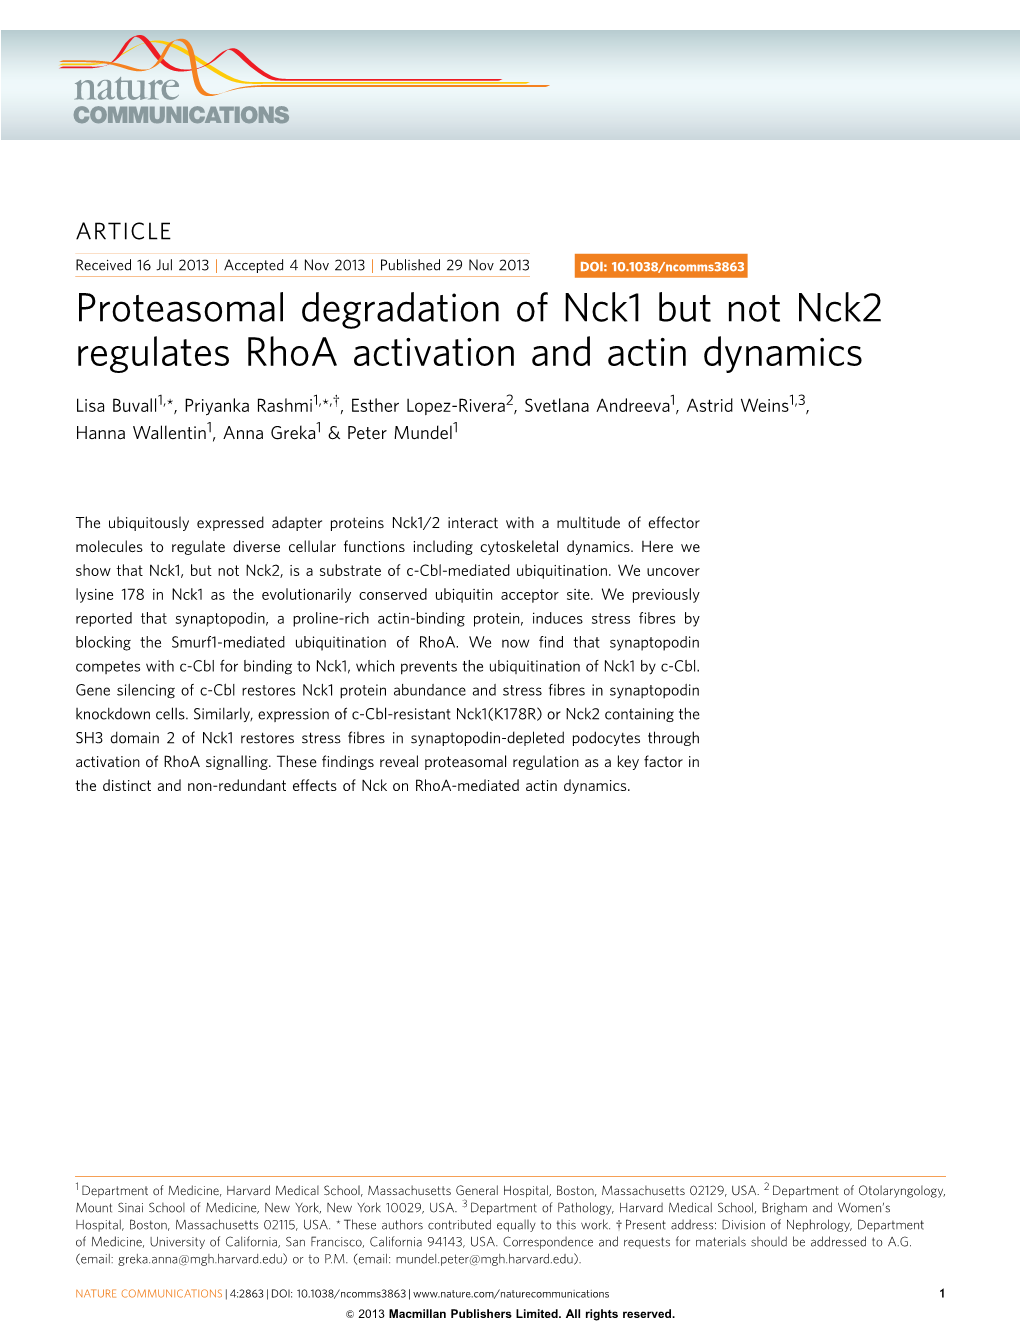 Proteasomal Degradation of Nck1 but Not Nck2 Regulates Rhoa Activation and Actin Dynamics